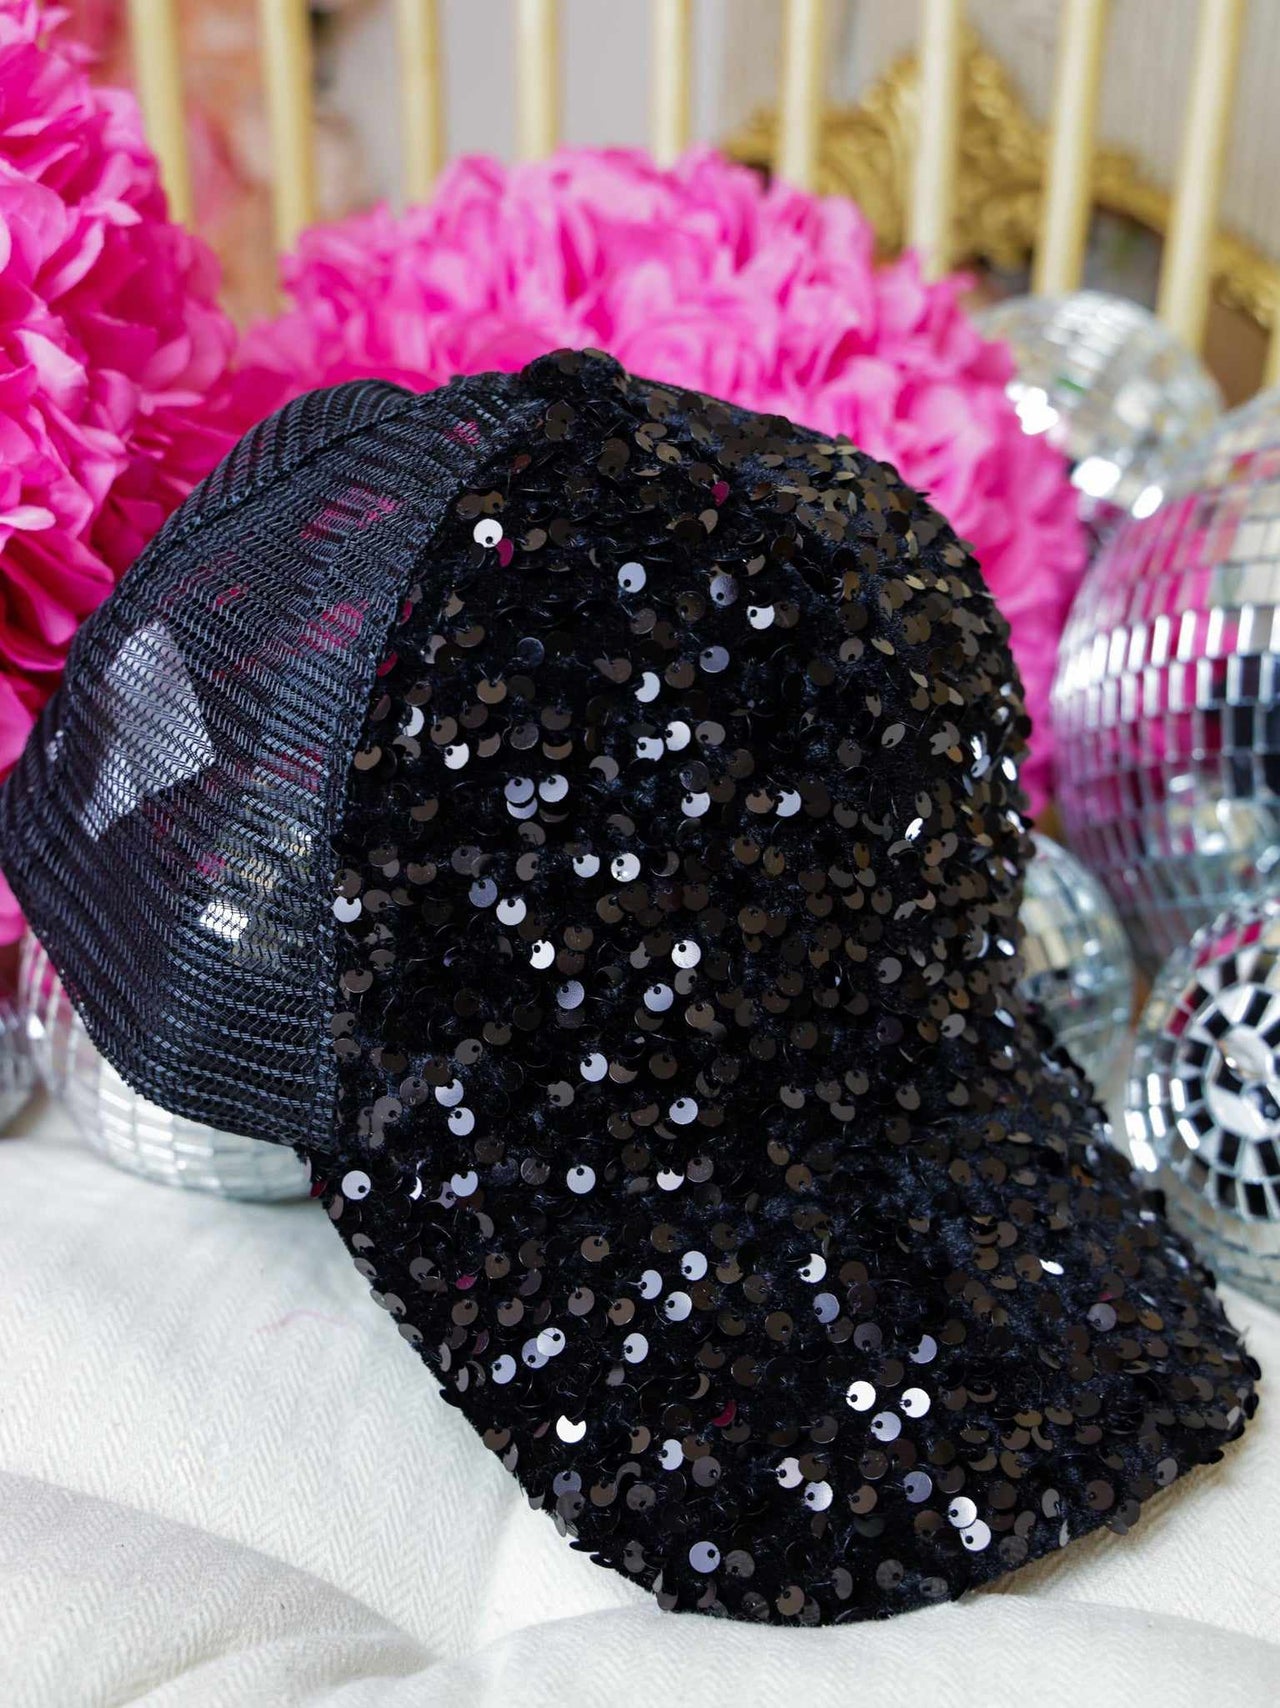 Black sequin women's baseball cap.